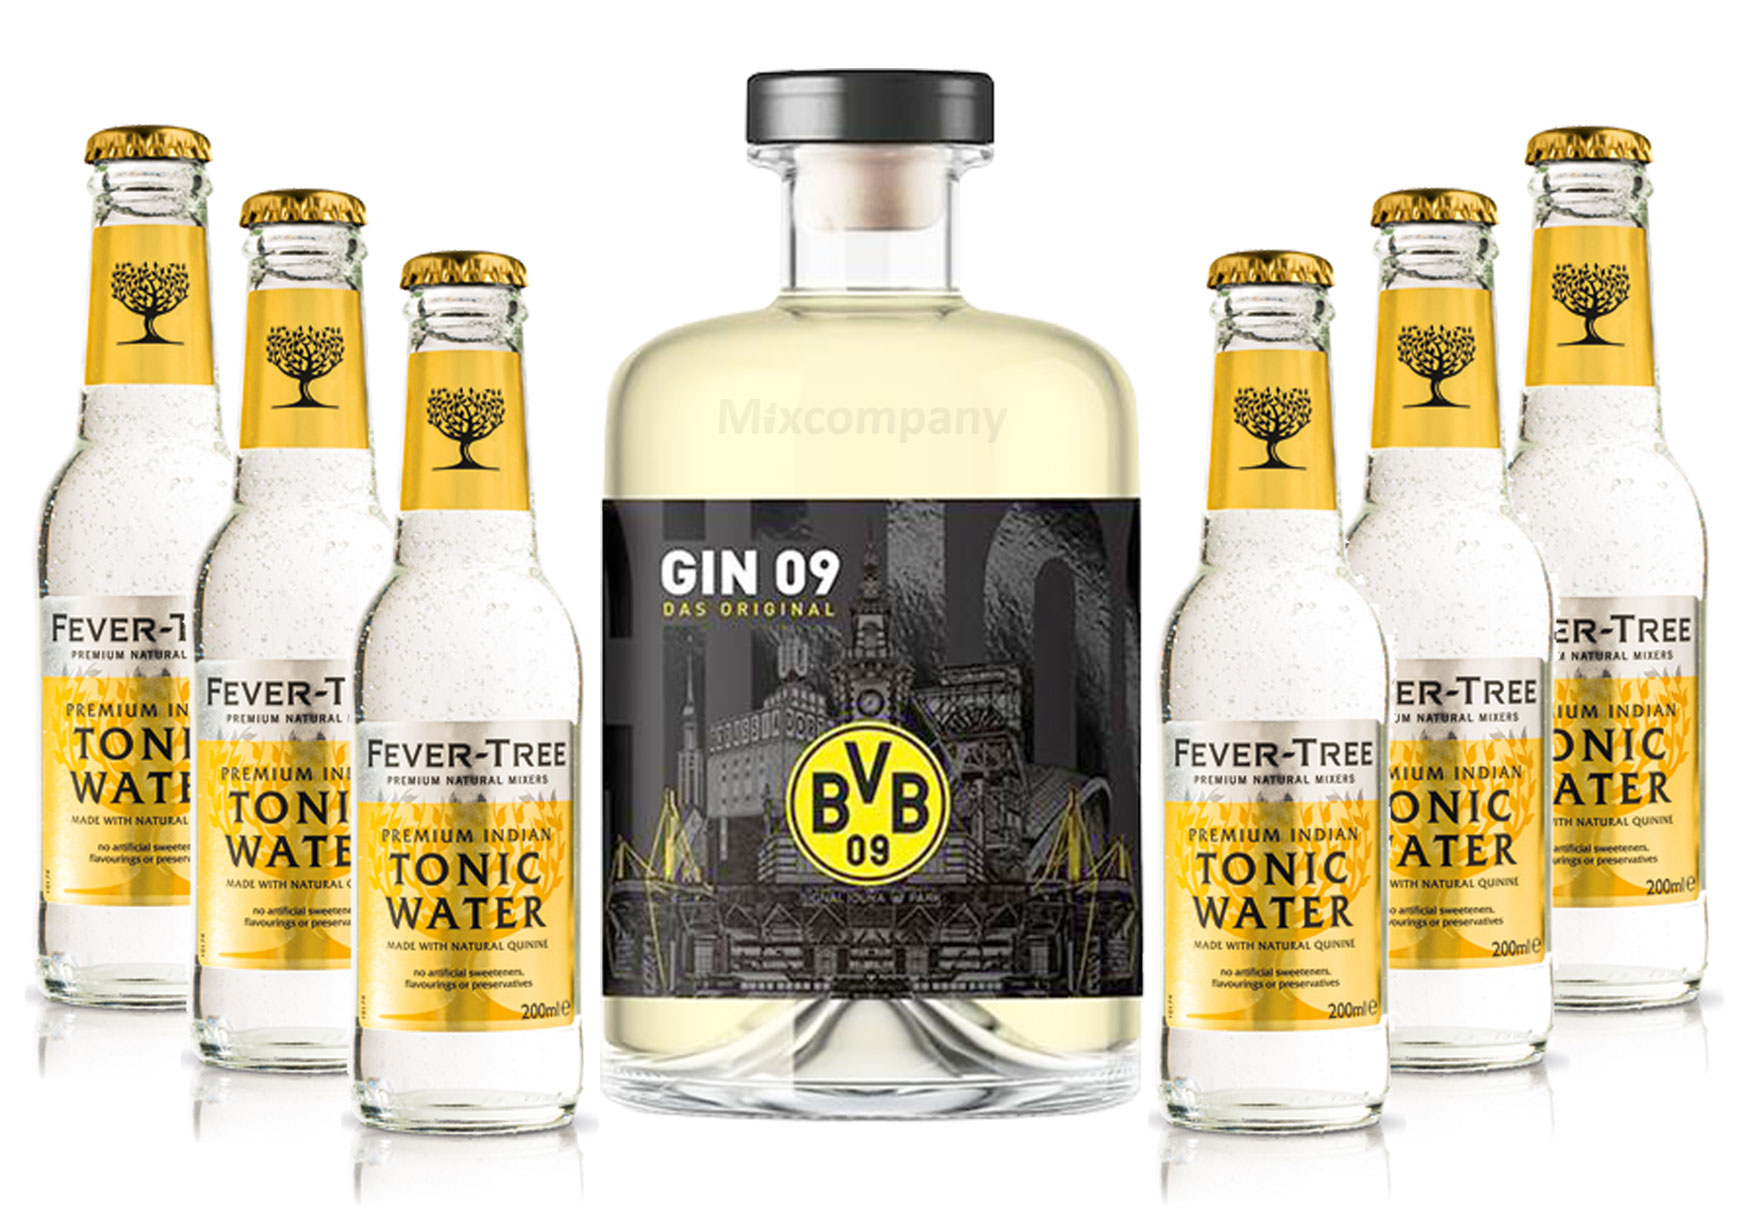 BVB Gin 09 Das Original 0,5l 500ml (43% Vol) + 6xFever-Tree Premium Indian Tonic Water 0,2l MEHRWEG inkl. Pfand- [Enthält Sulfite]